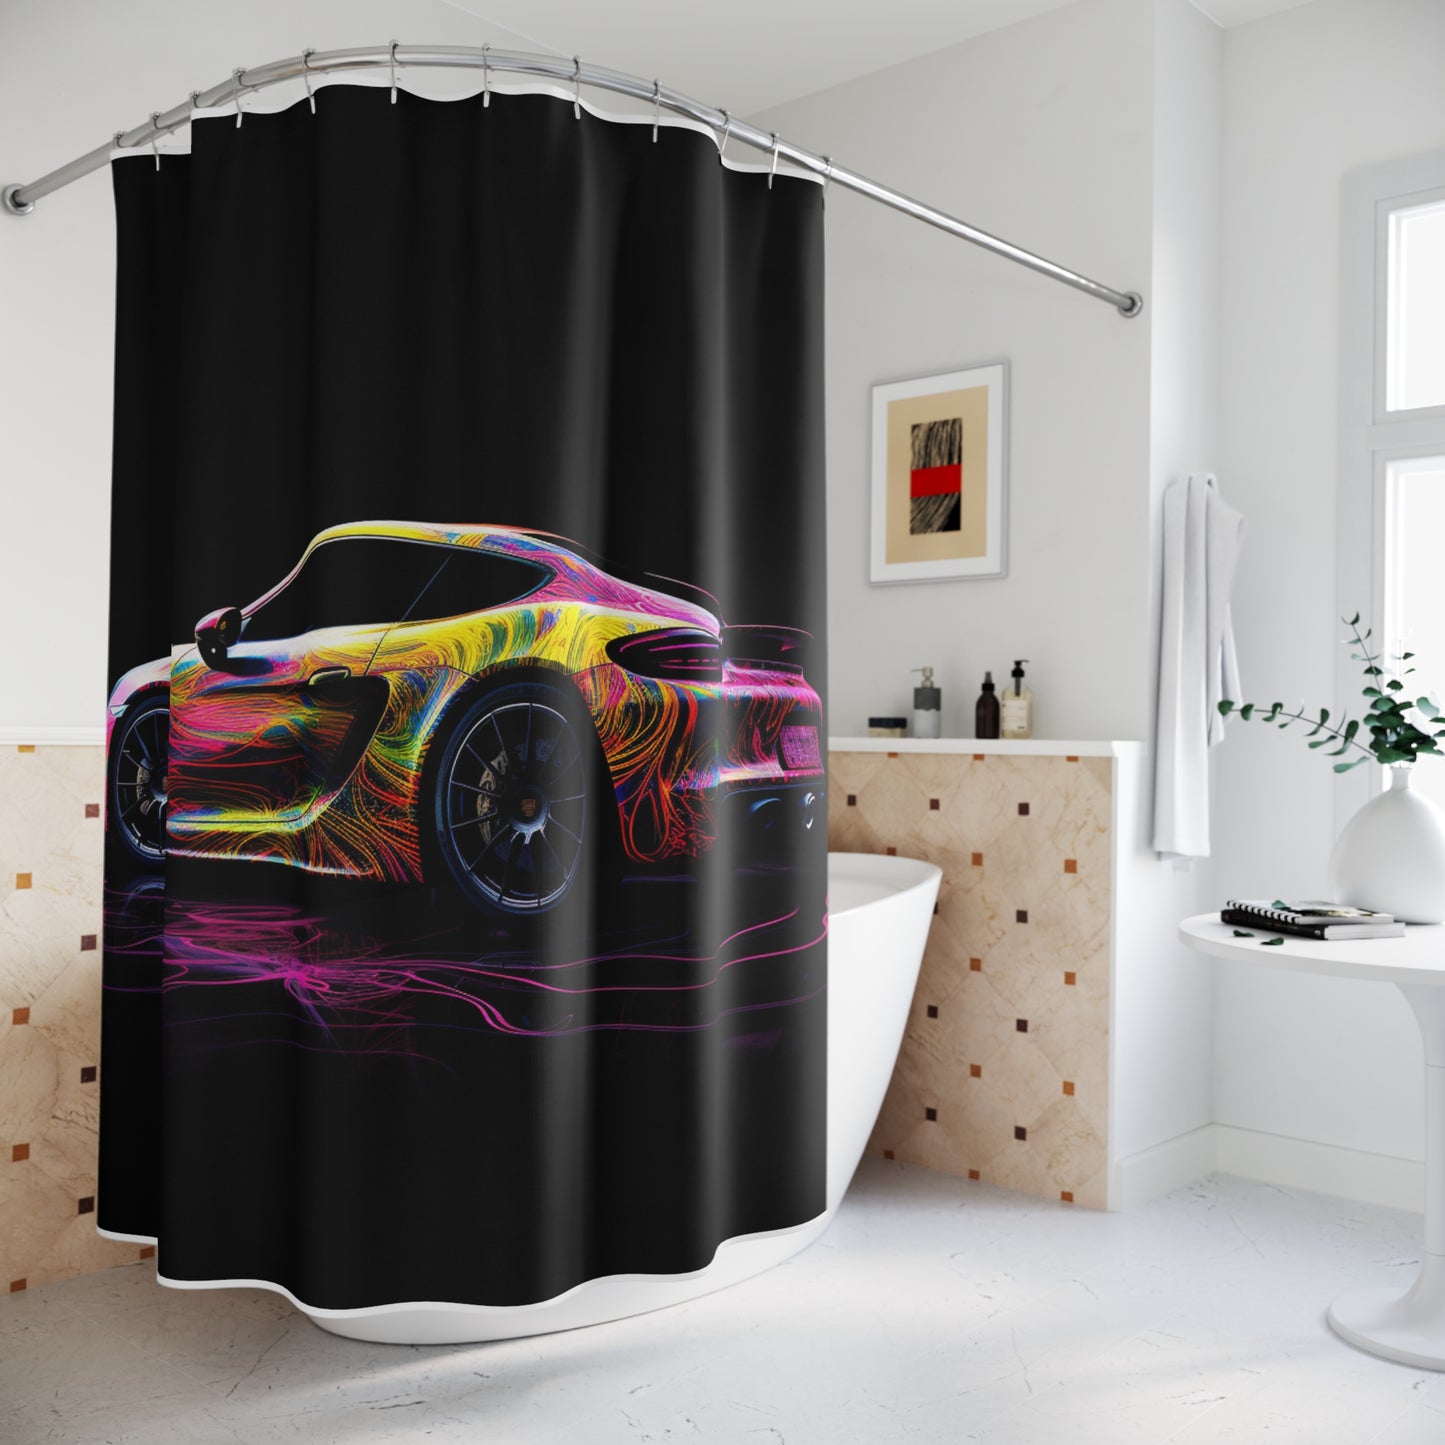 Polyester Shower Curtain Porsche Flair 4